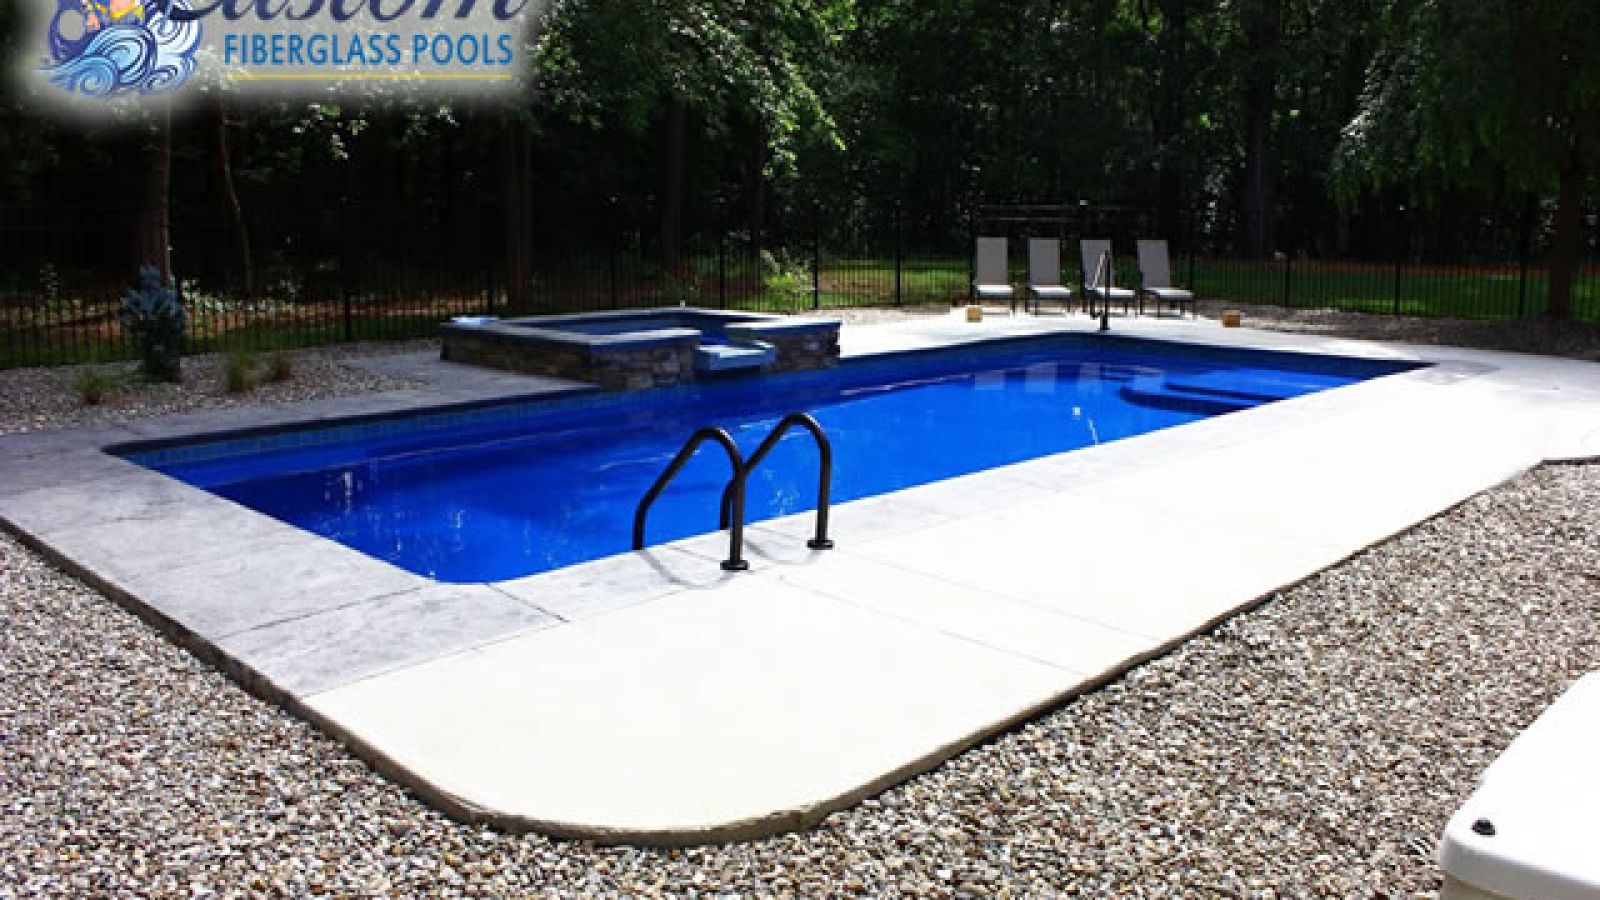 Centennial Luxury Fiberglass Pool offering stylish summer enjoyment in Clarksville, TN